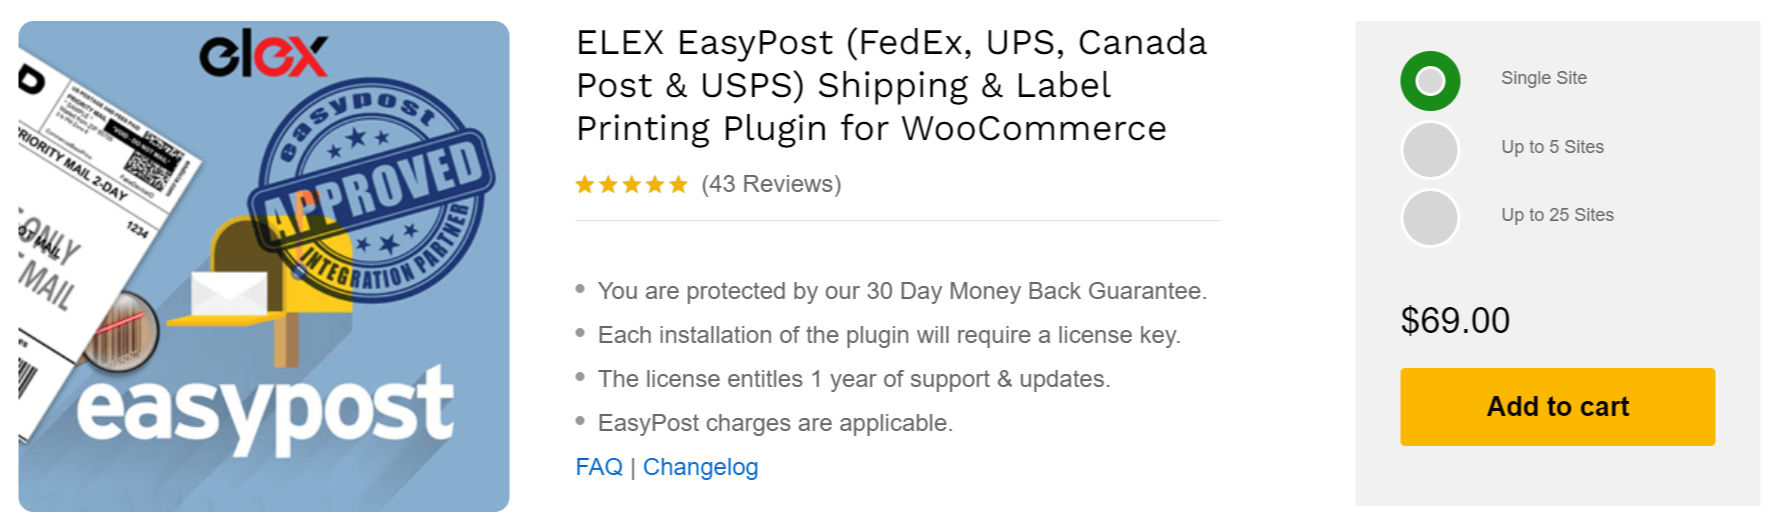 ELEX EasyPost (FedEx, UPS, Canada Post & USPS) Shipping & Label Printing Plugin for WooCommerce